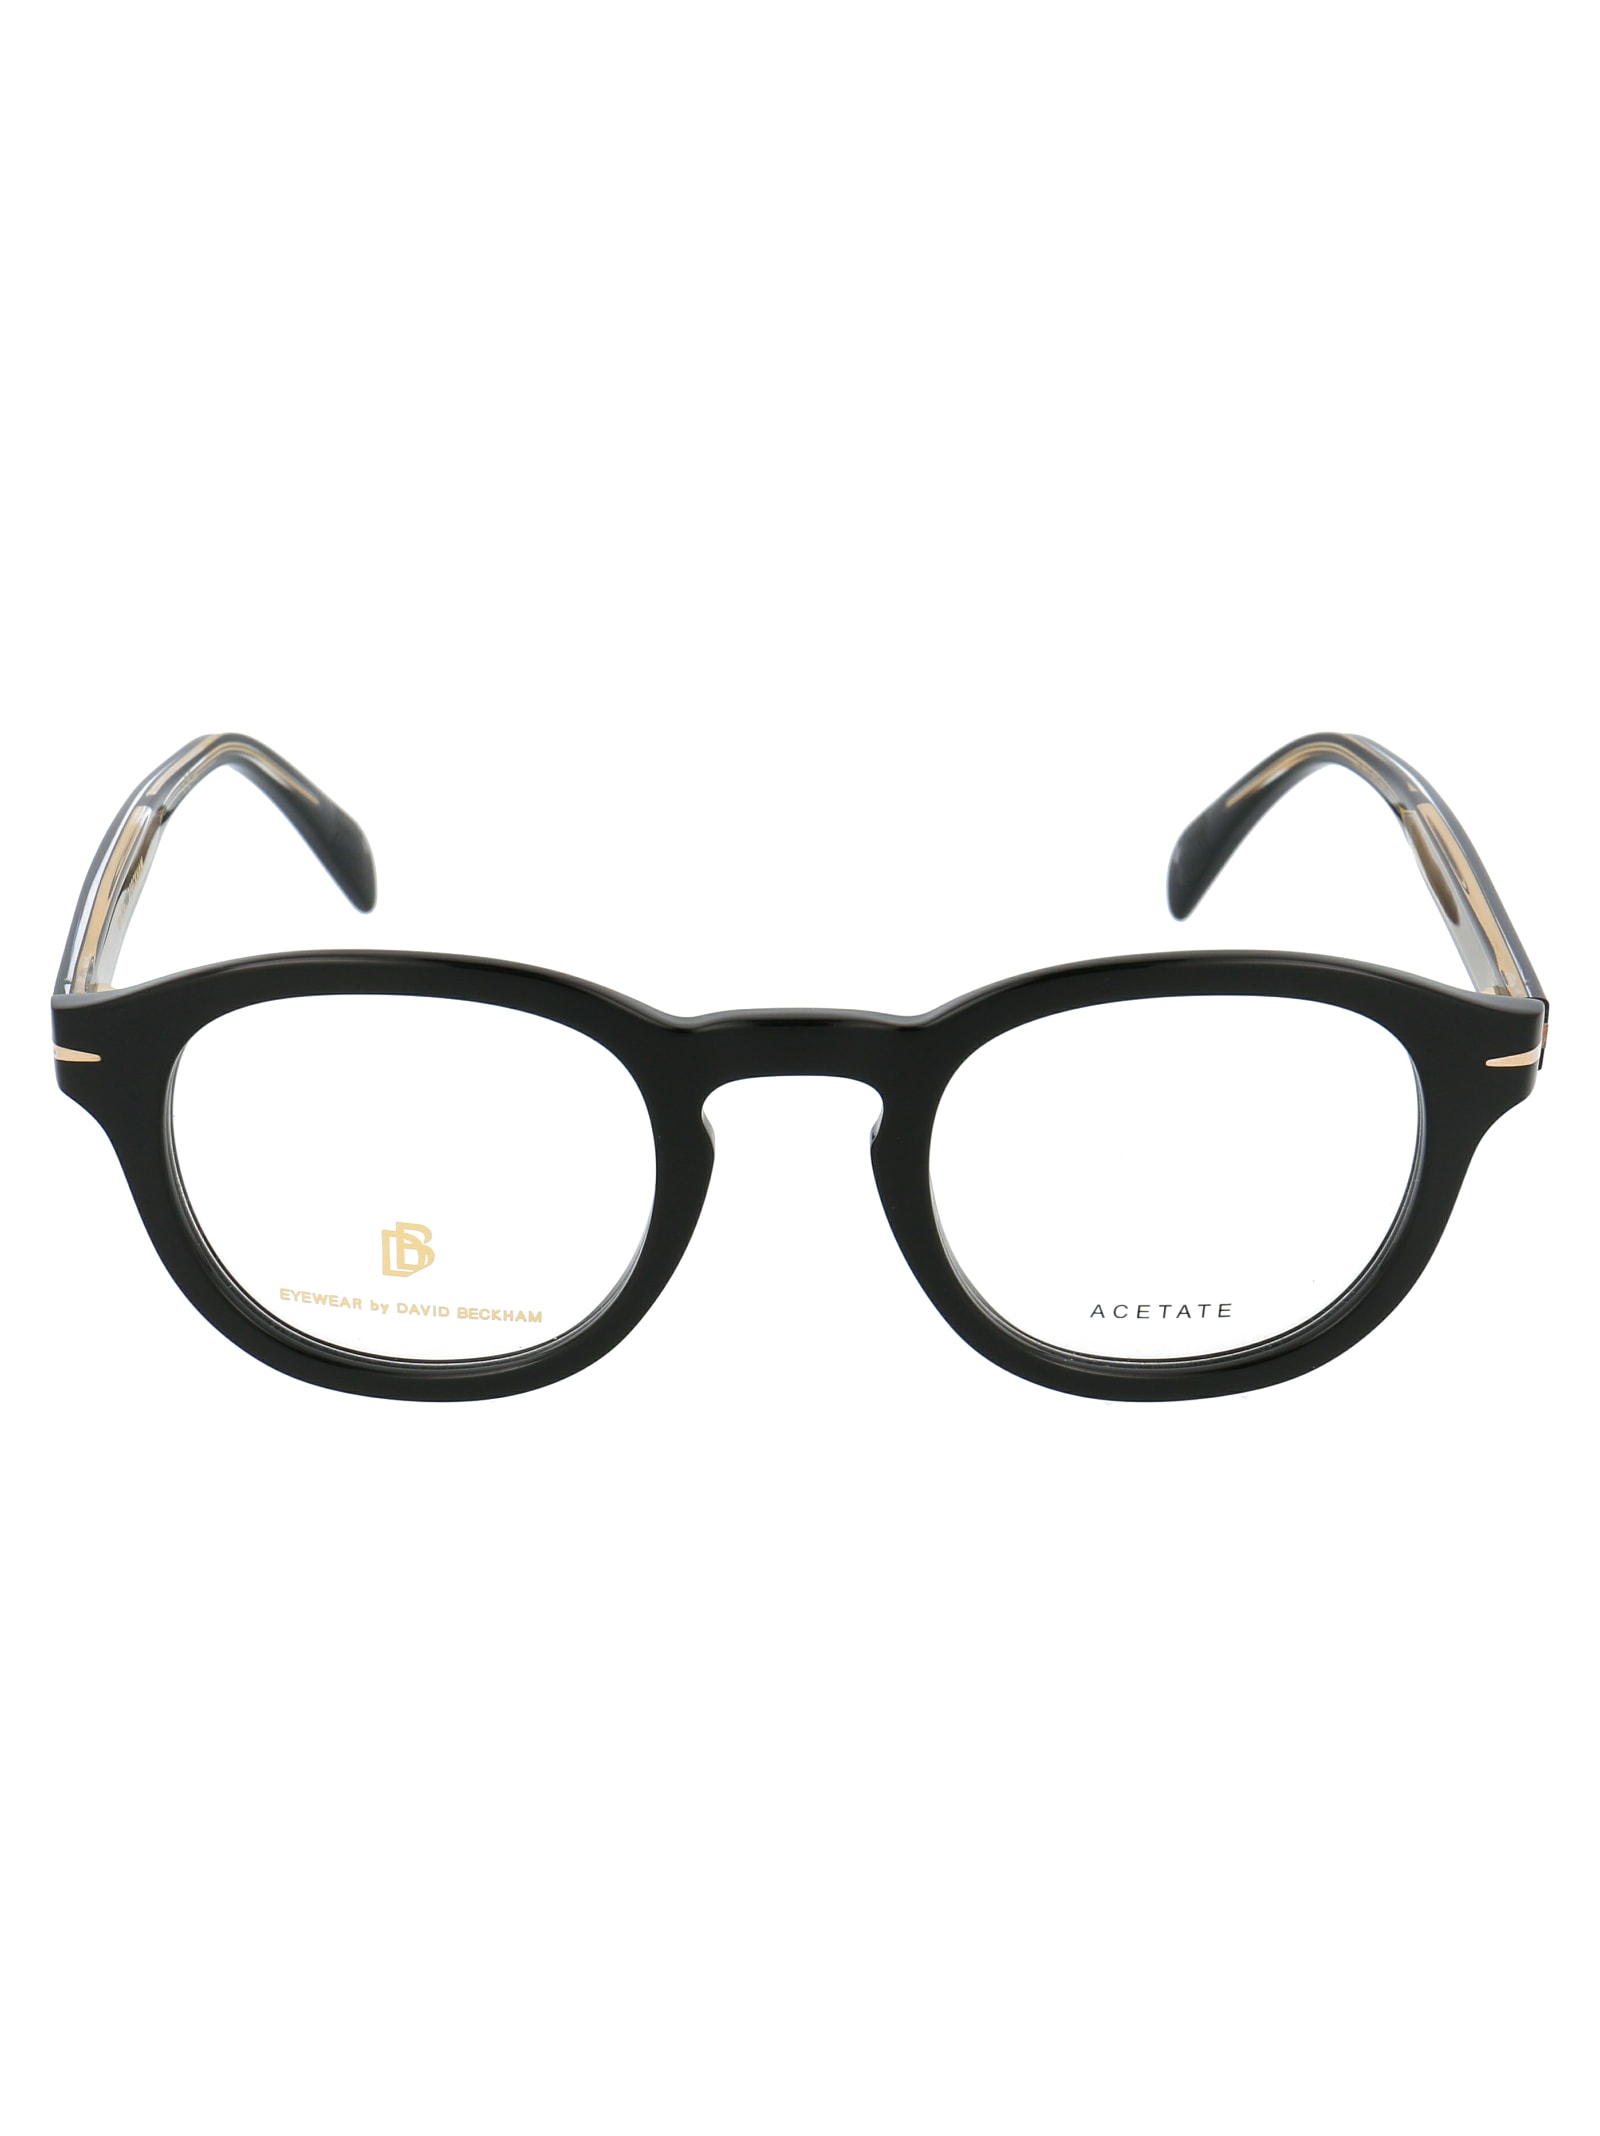 DB Eyewear by David Beckham Db 7017 Glasses